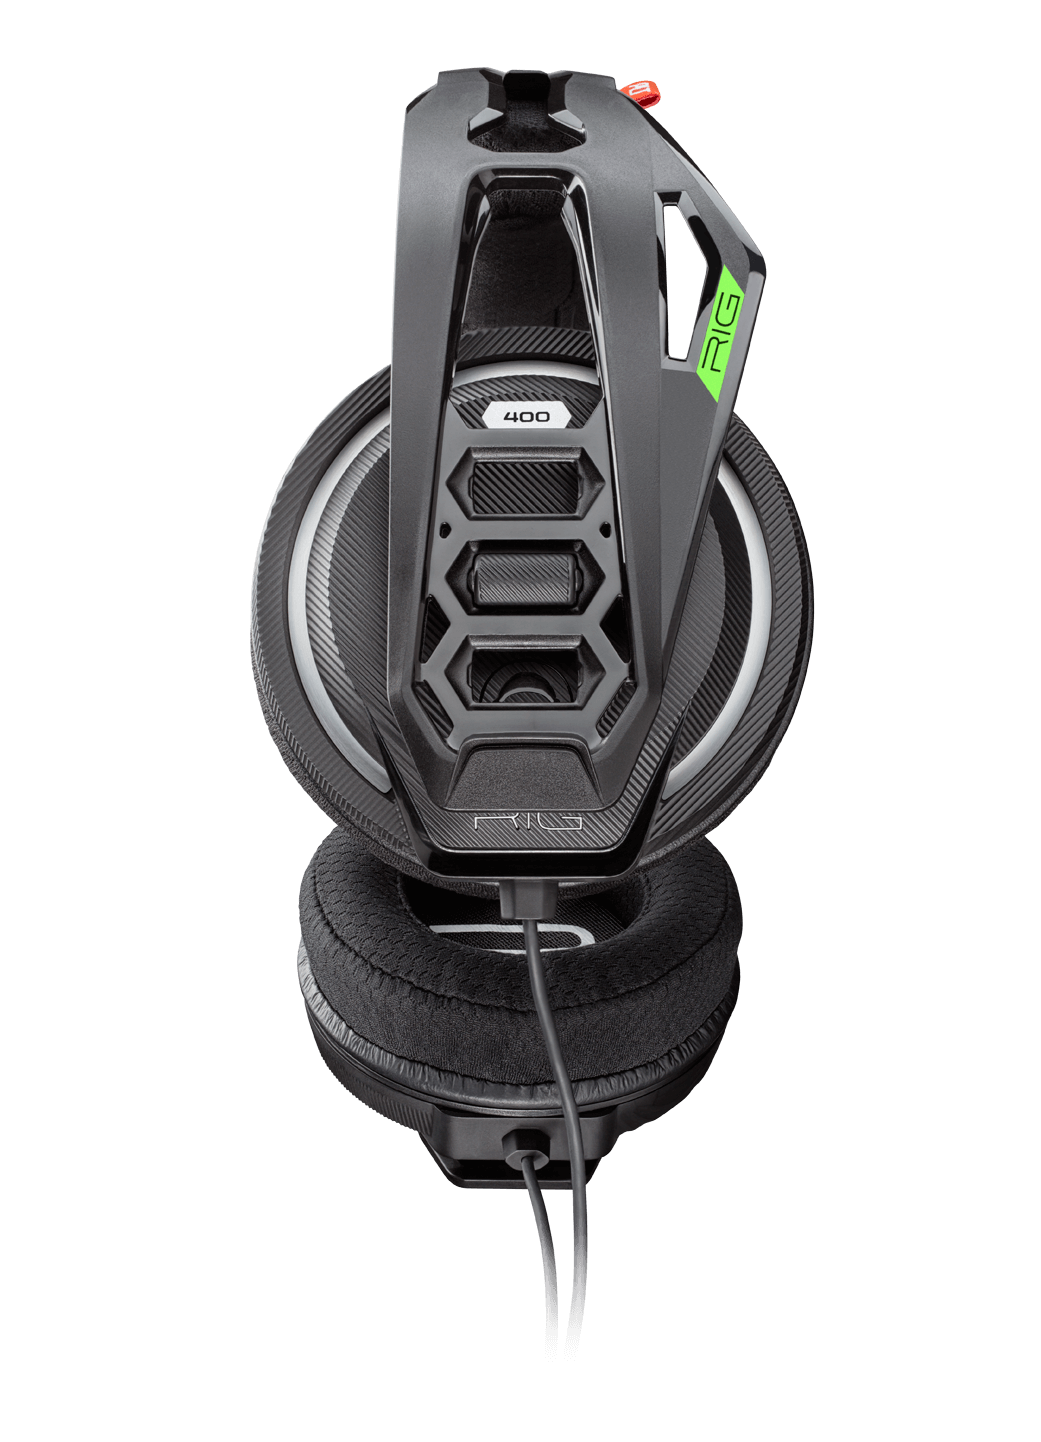 plantronics rig 400hx headset review